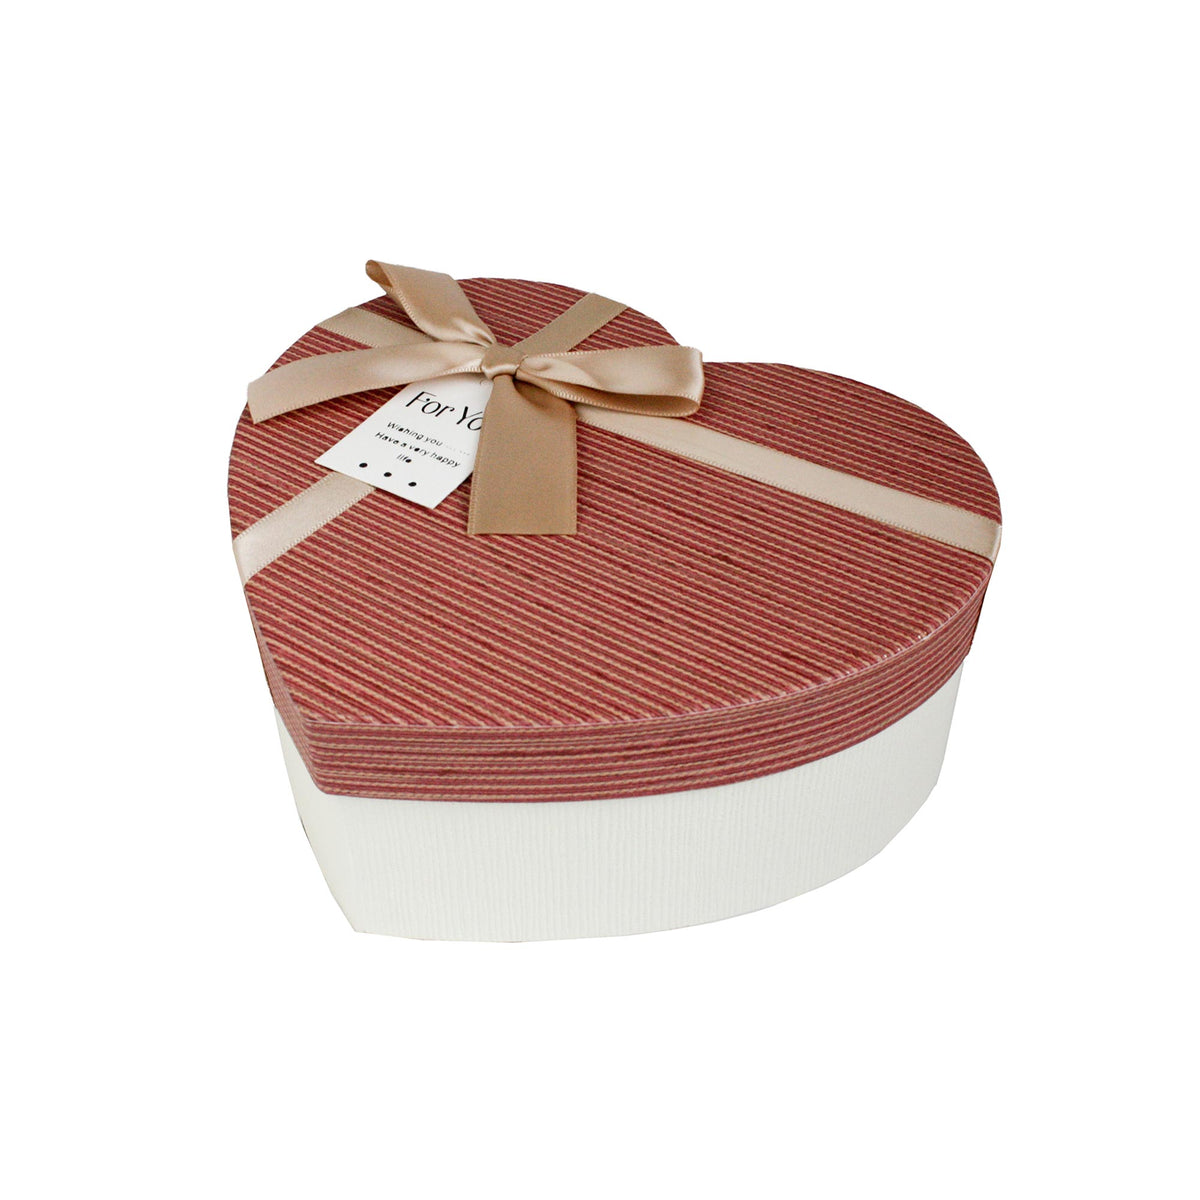 Luxury Heart Shaped Cream/Burgundy Gift Box - Single